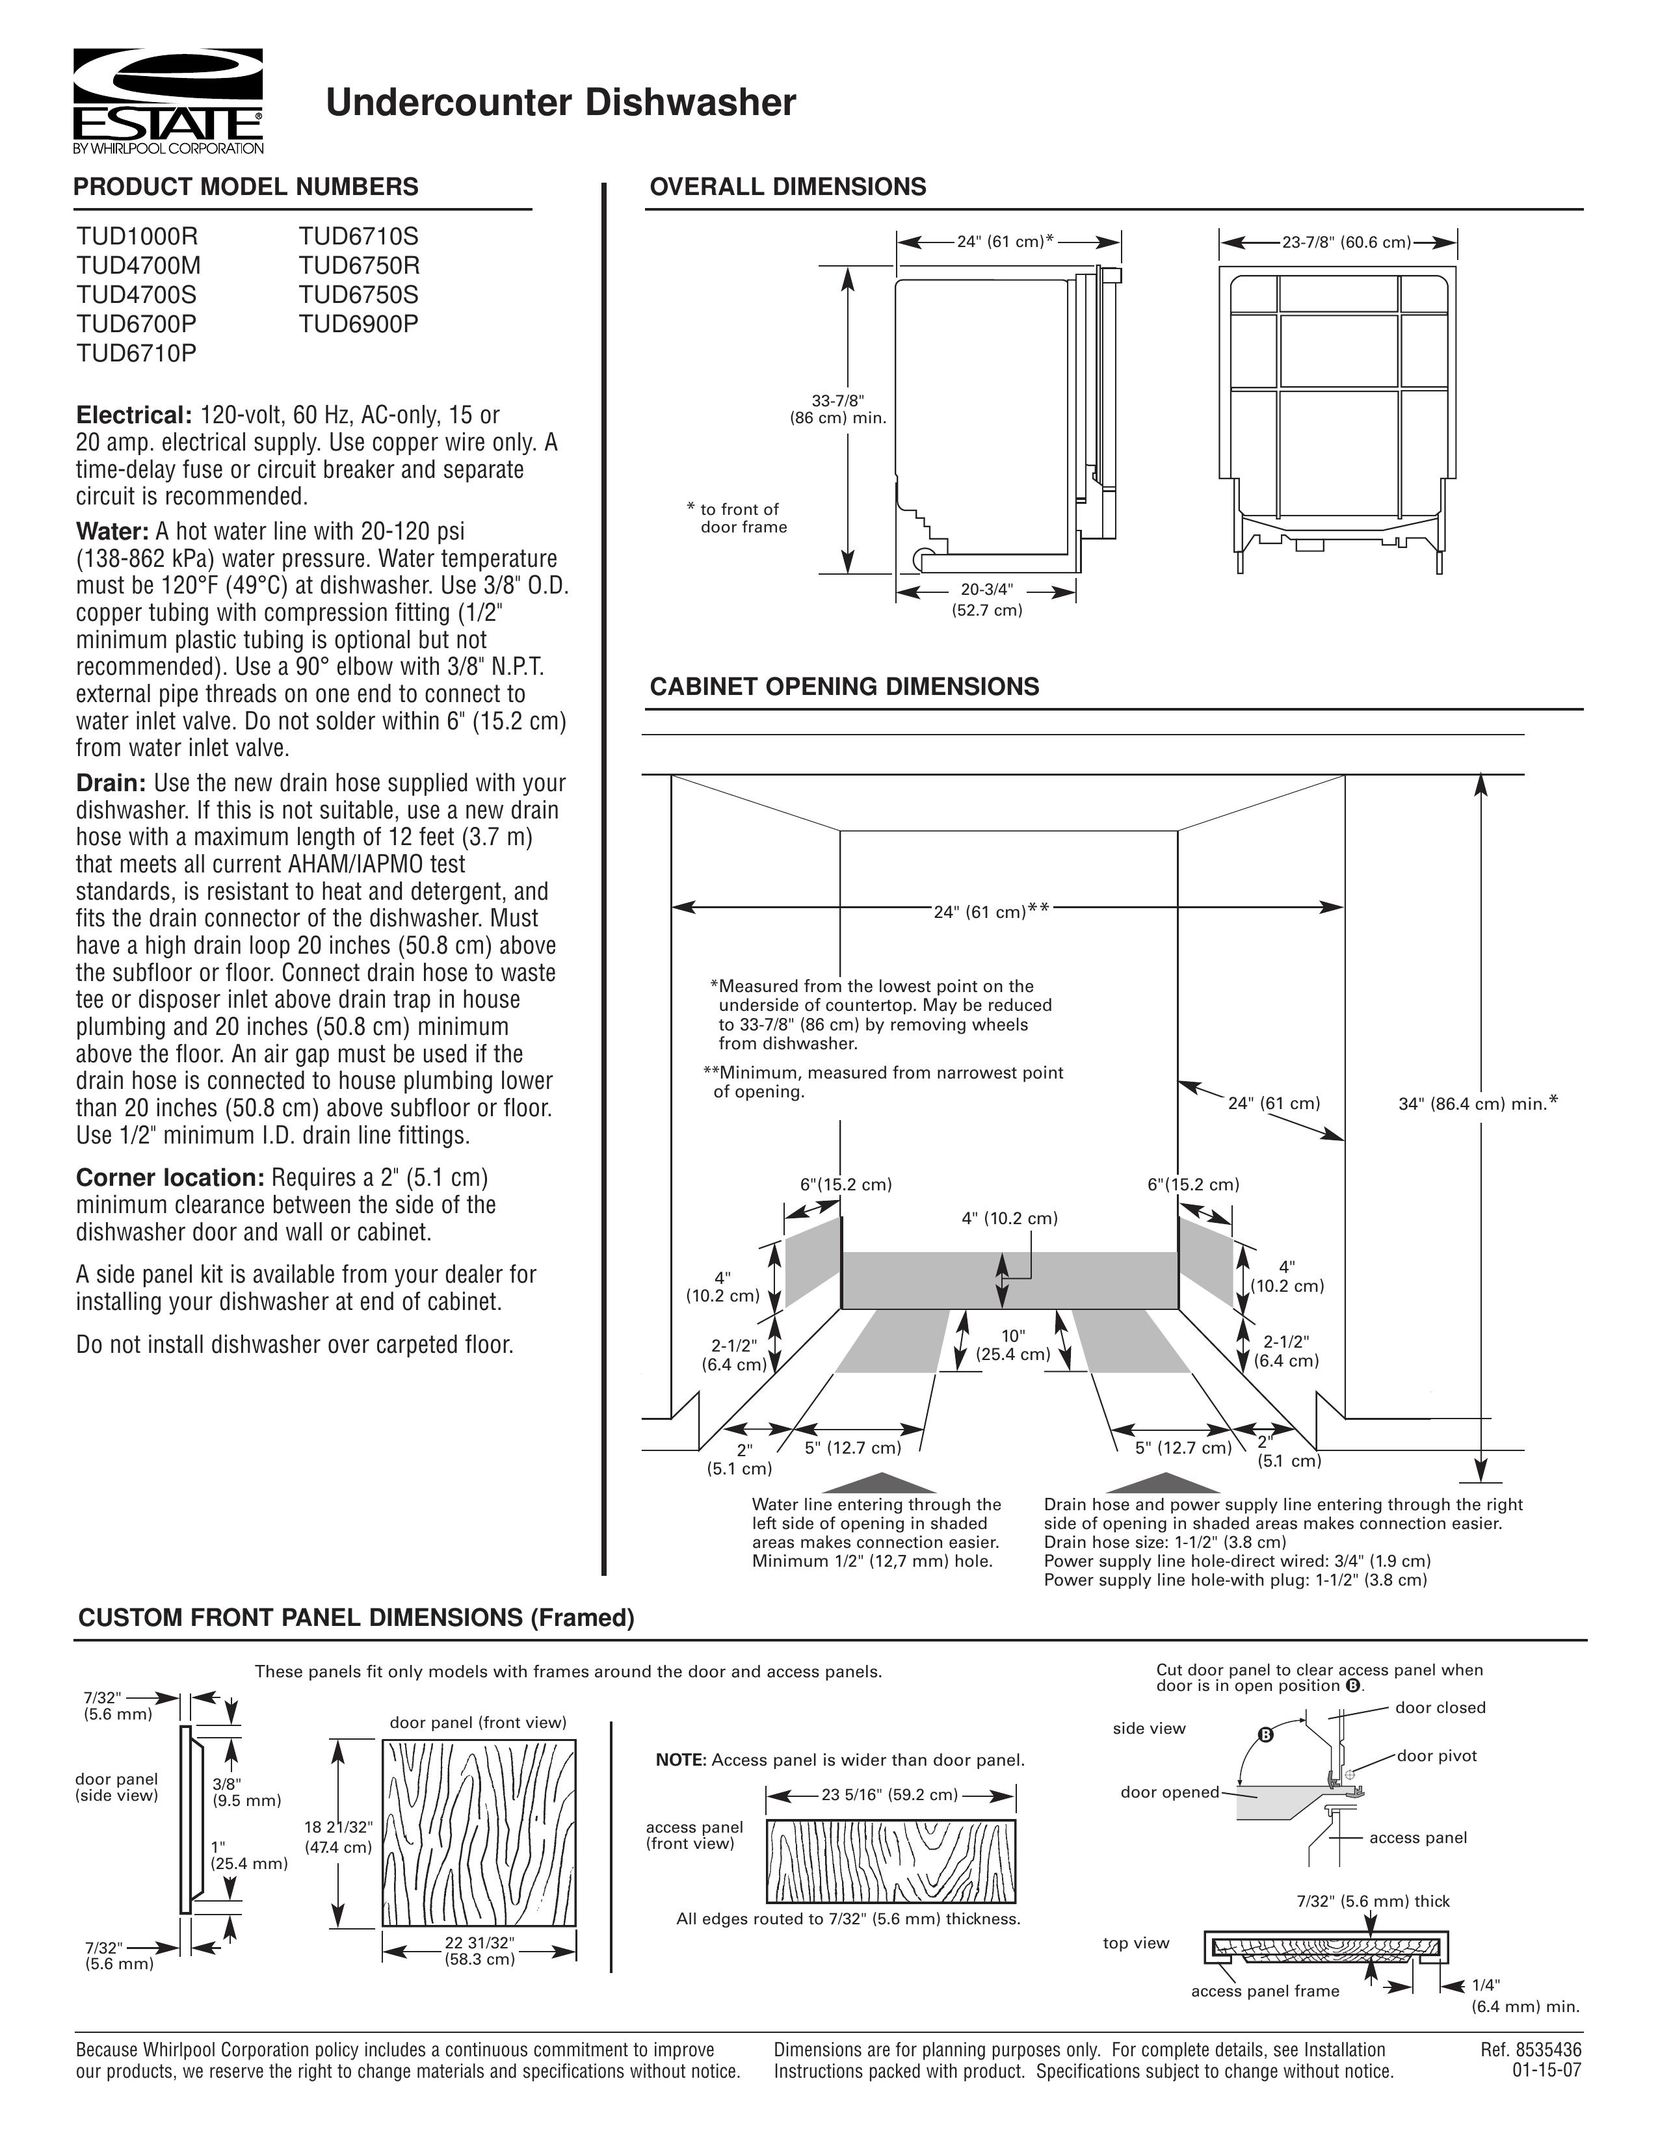 Estate TUD1000R Dishwasher User Manual